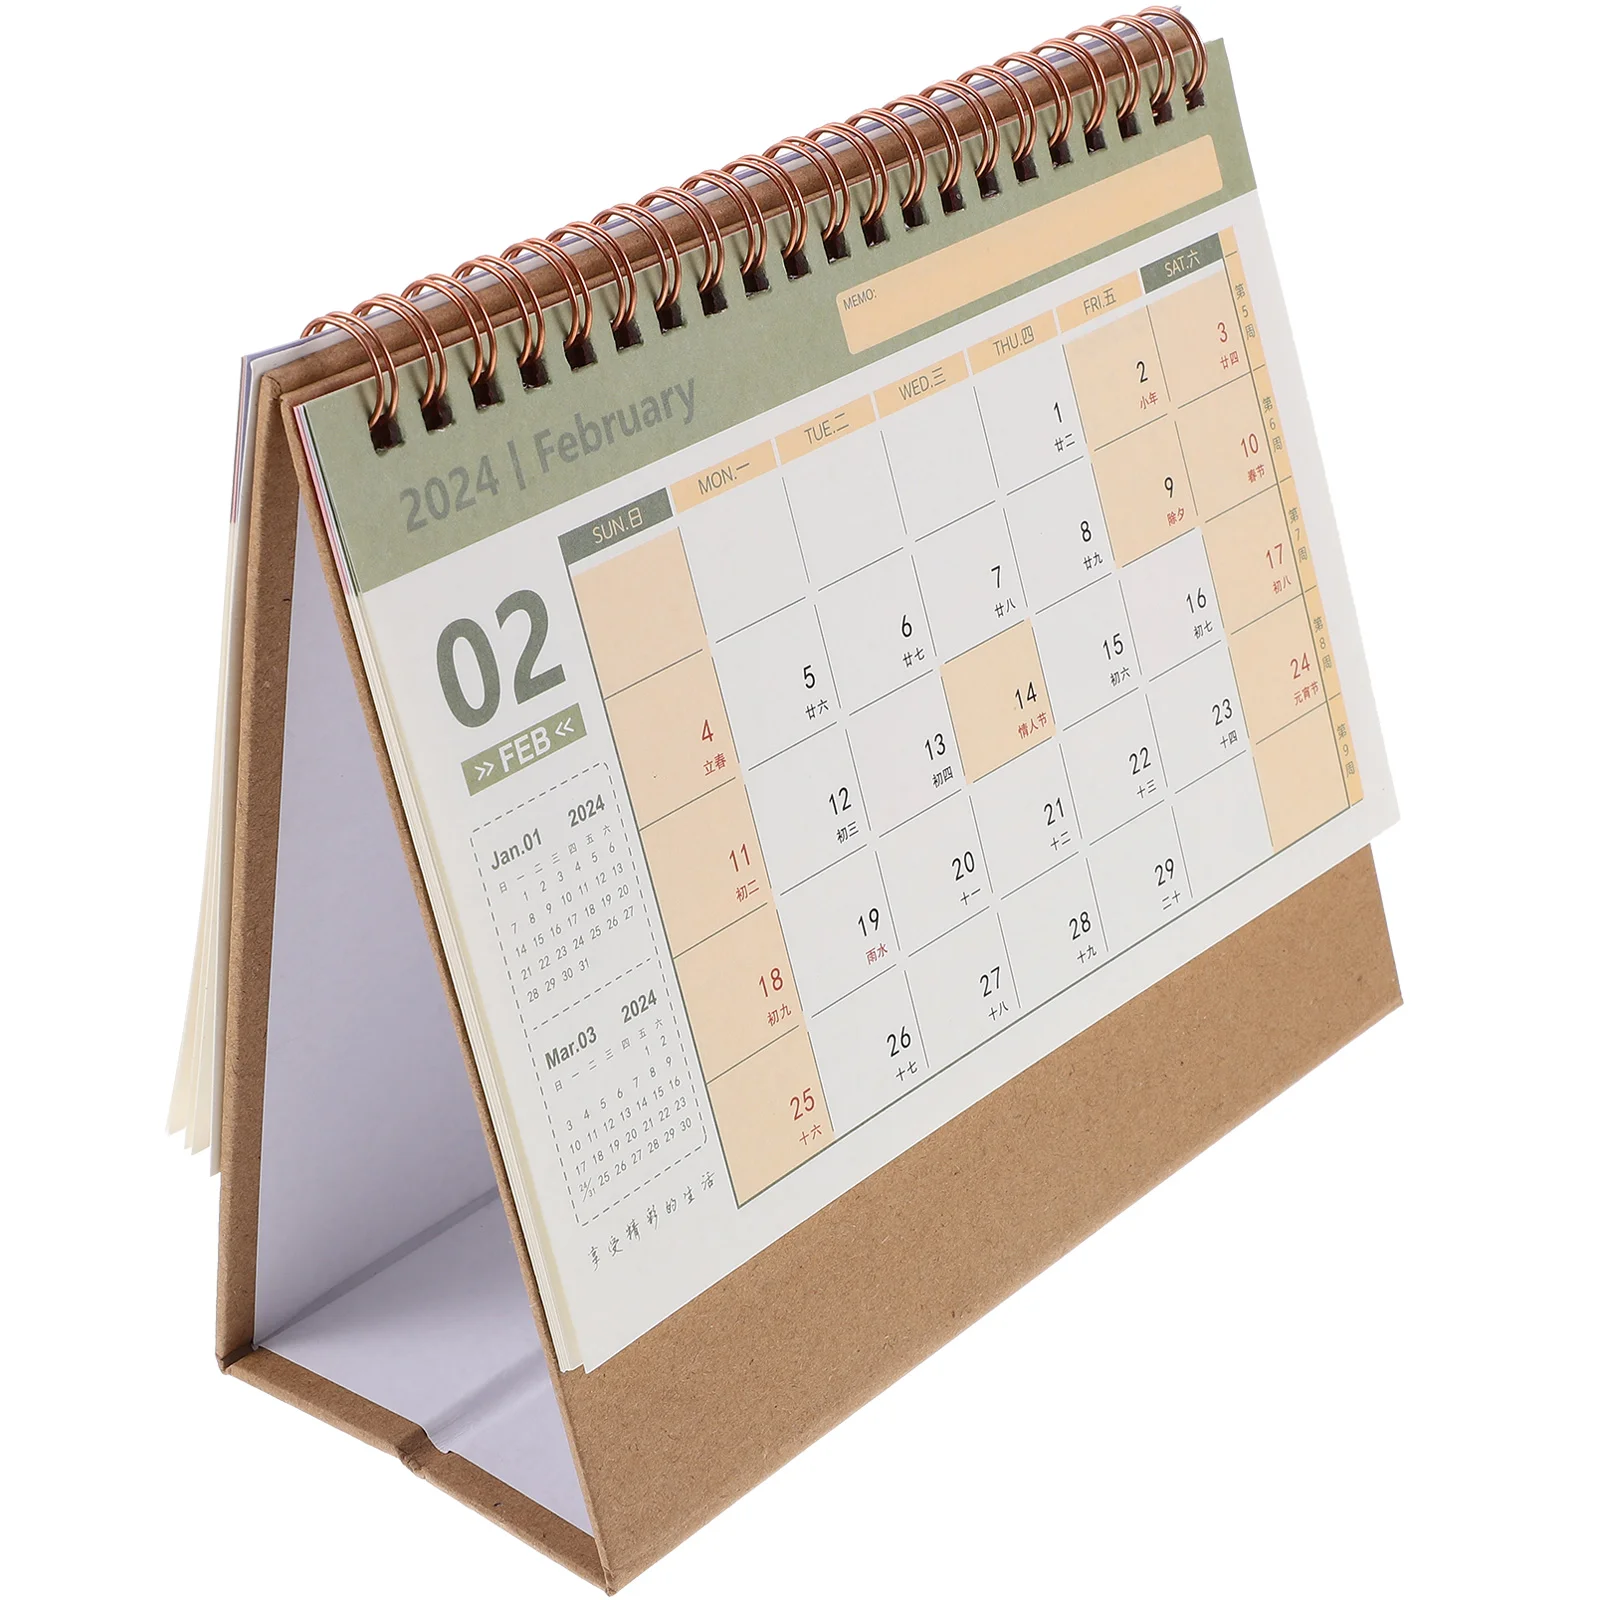 

Flipped Desk Calendar For 2024 Day Countdown Calendar Office Desktop Calendar Flipped Desk Calendar Agenda